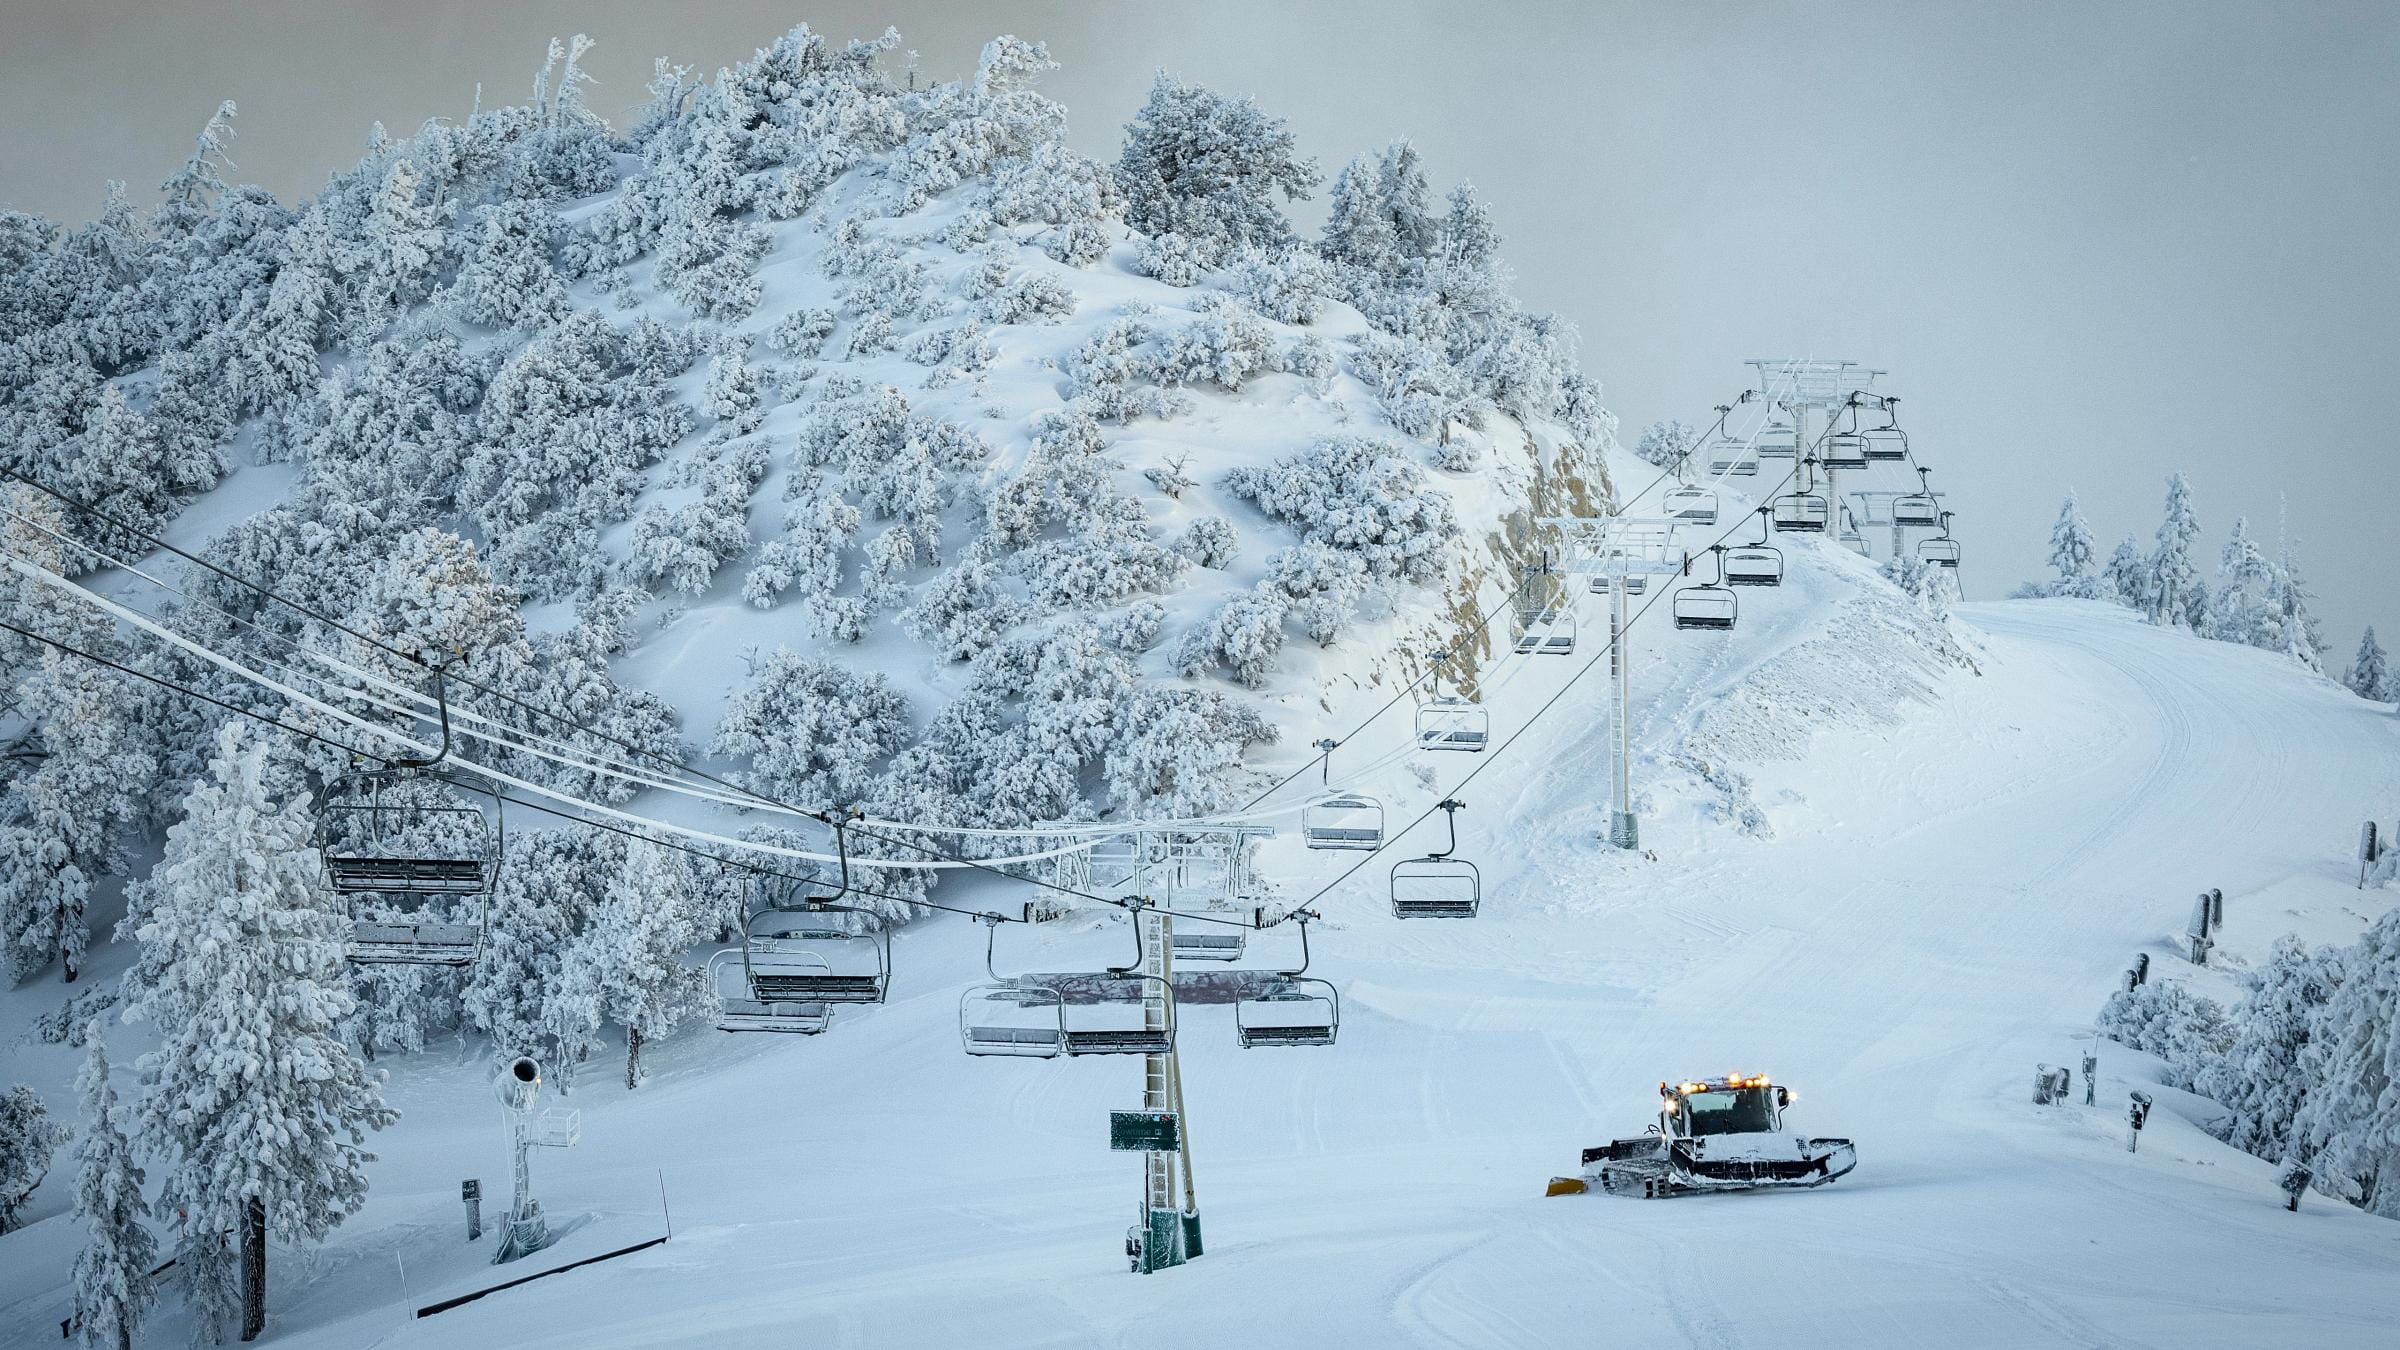 Snowy ski resort chairlifts